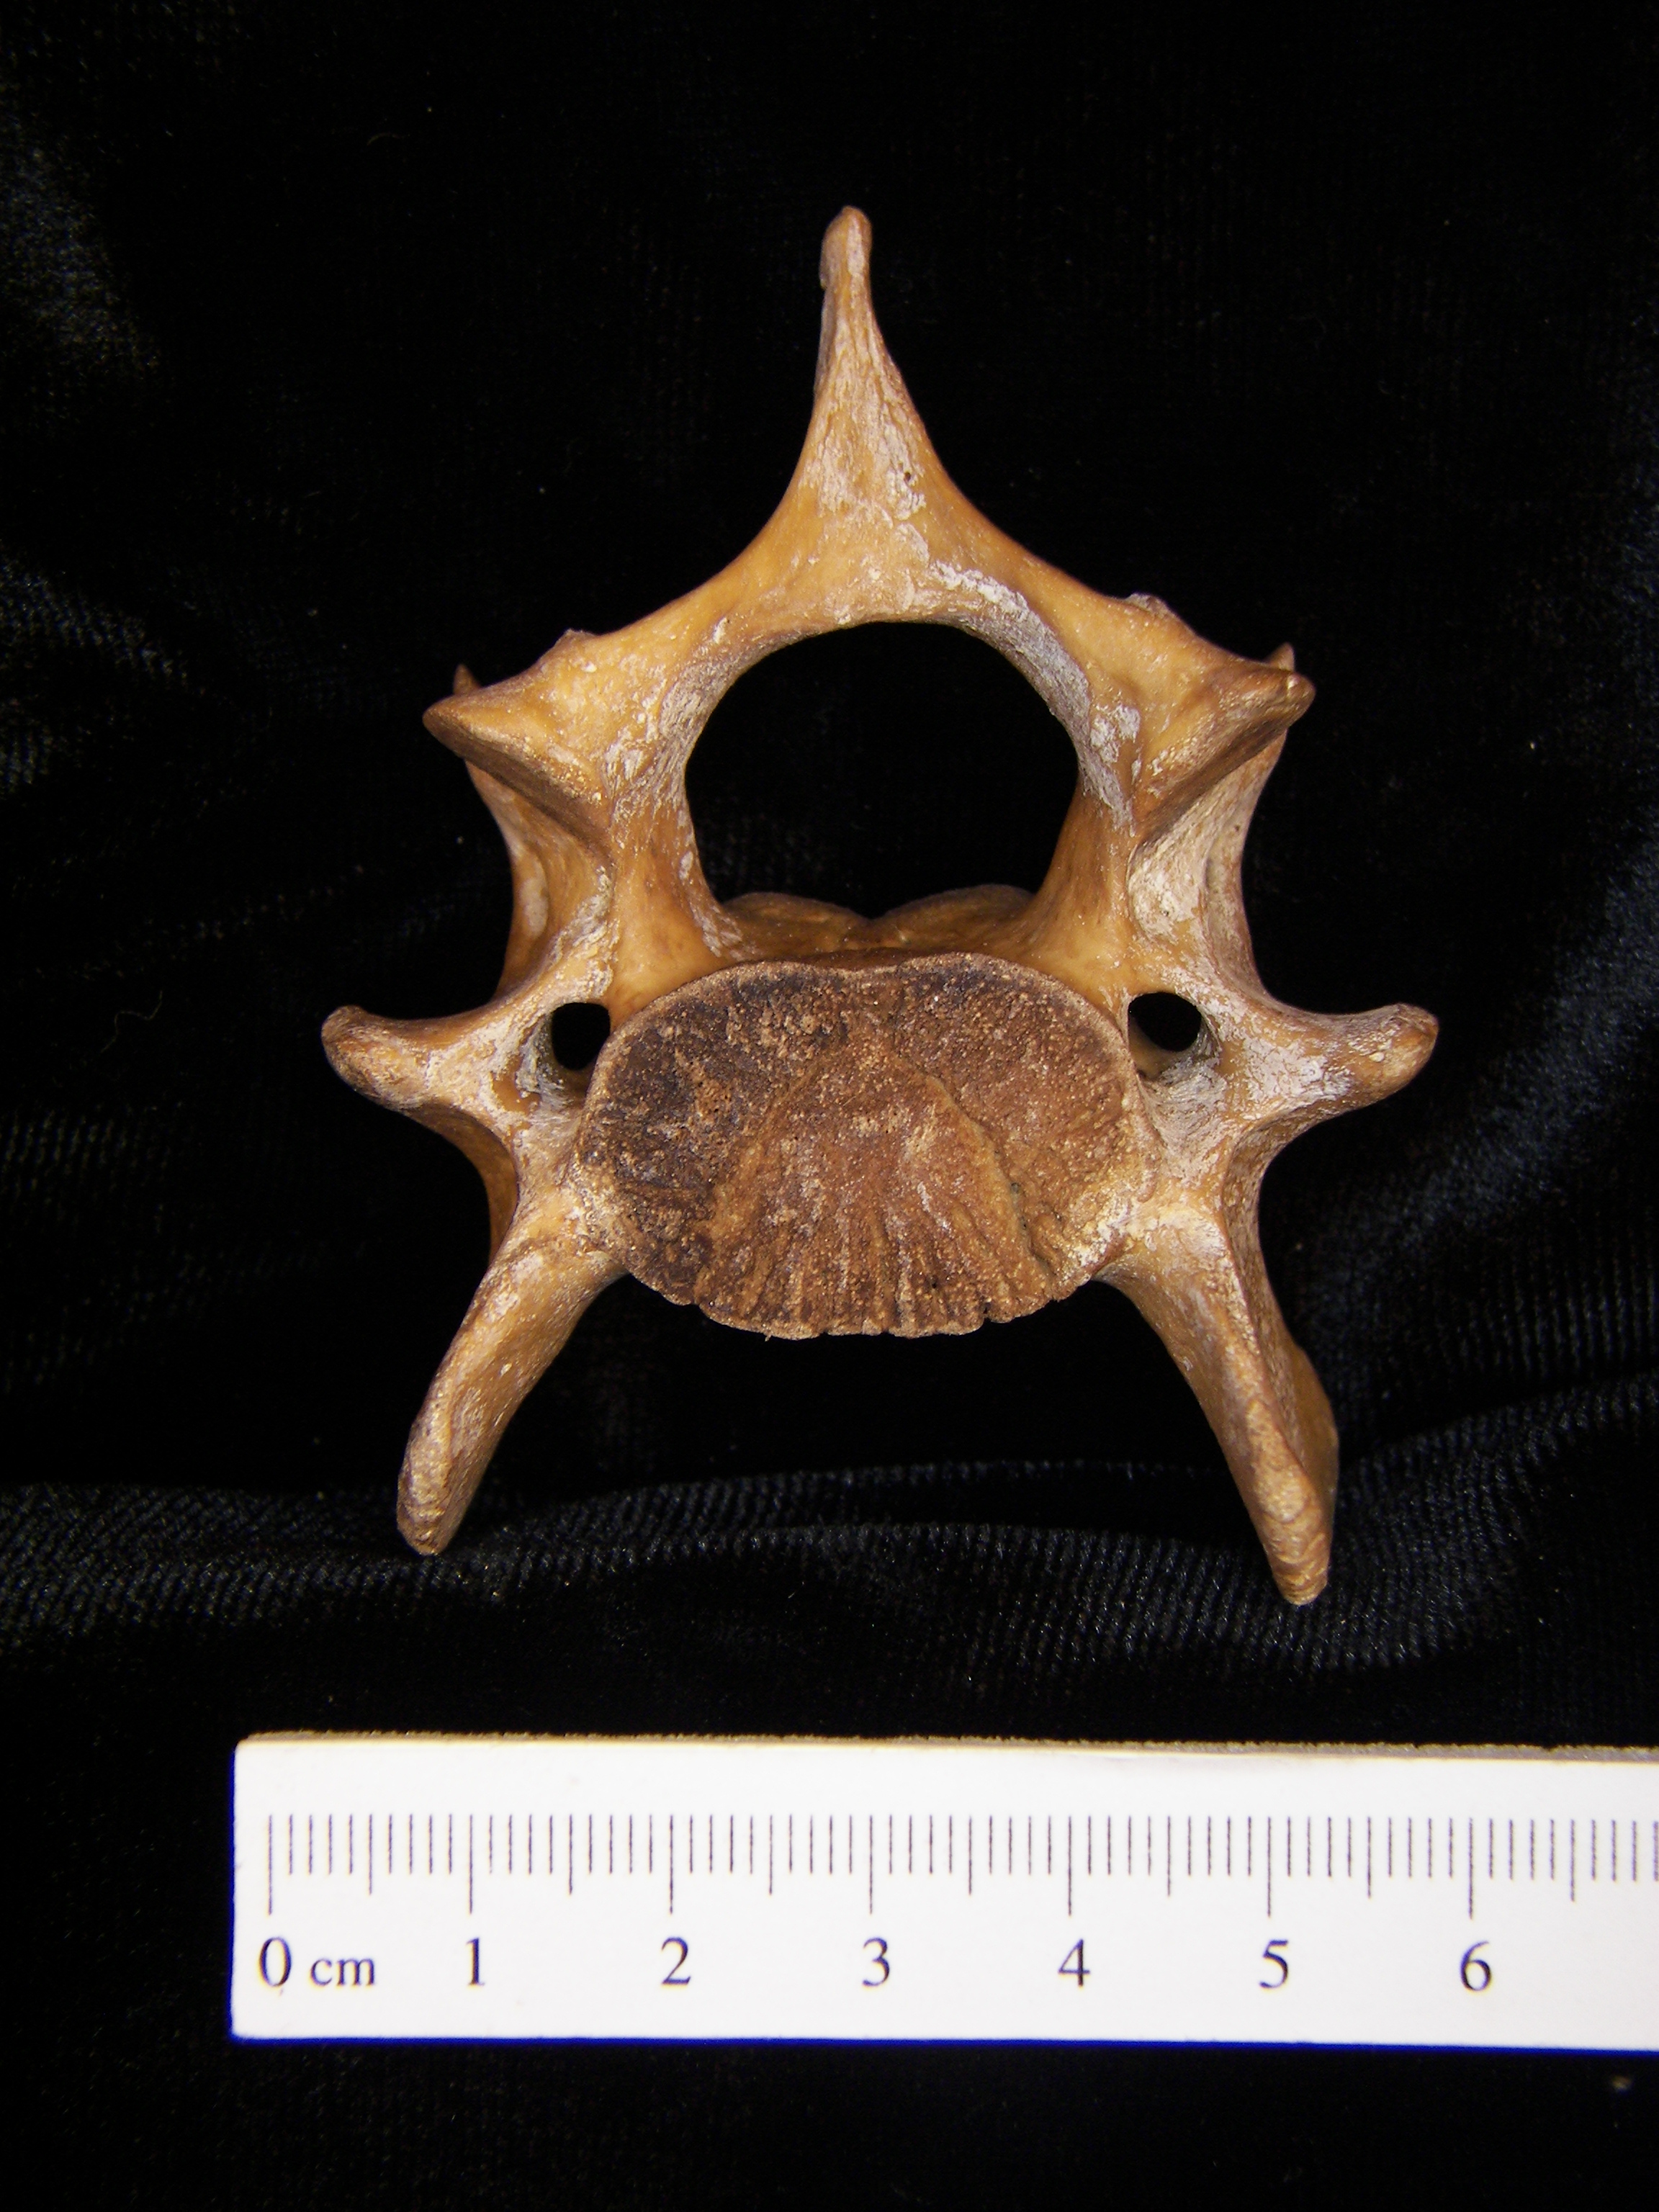 Wild boar (Sus scrofa) ~C6, 6th cervical vertebra, view 2